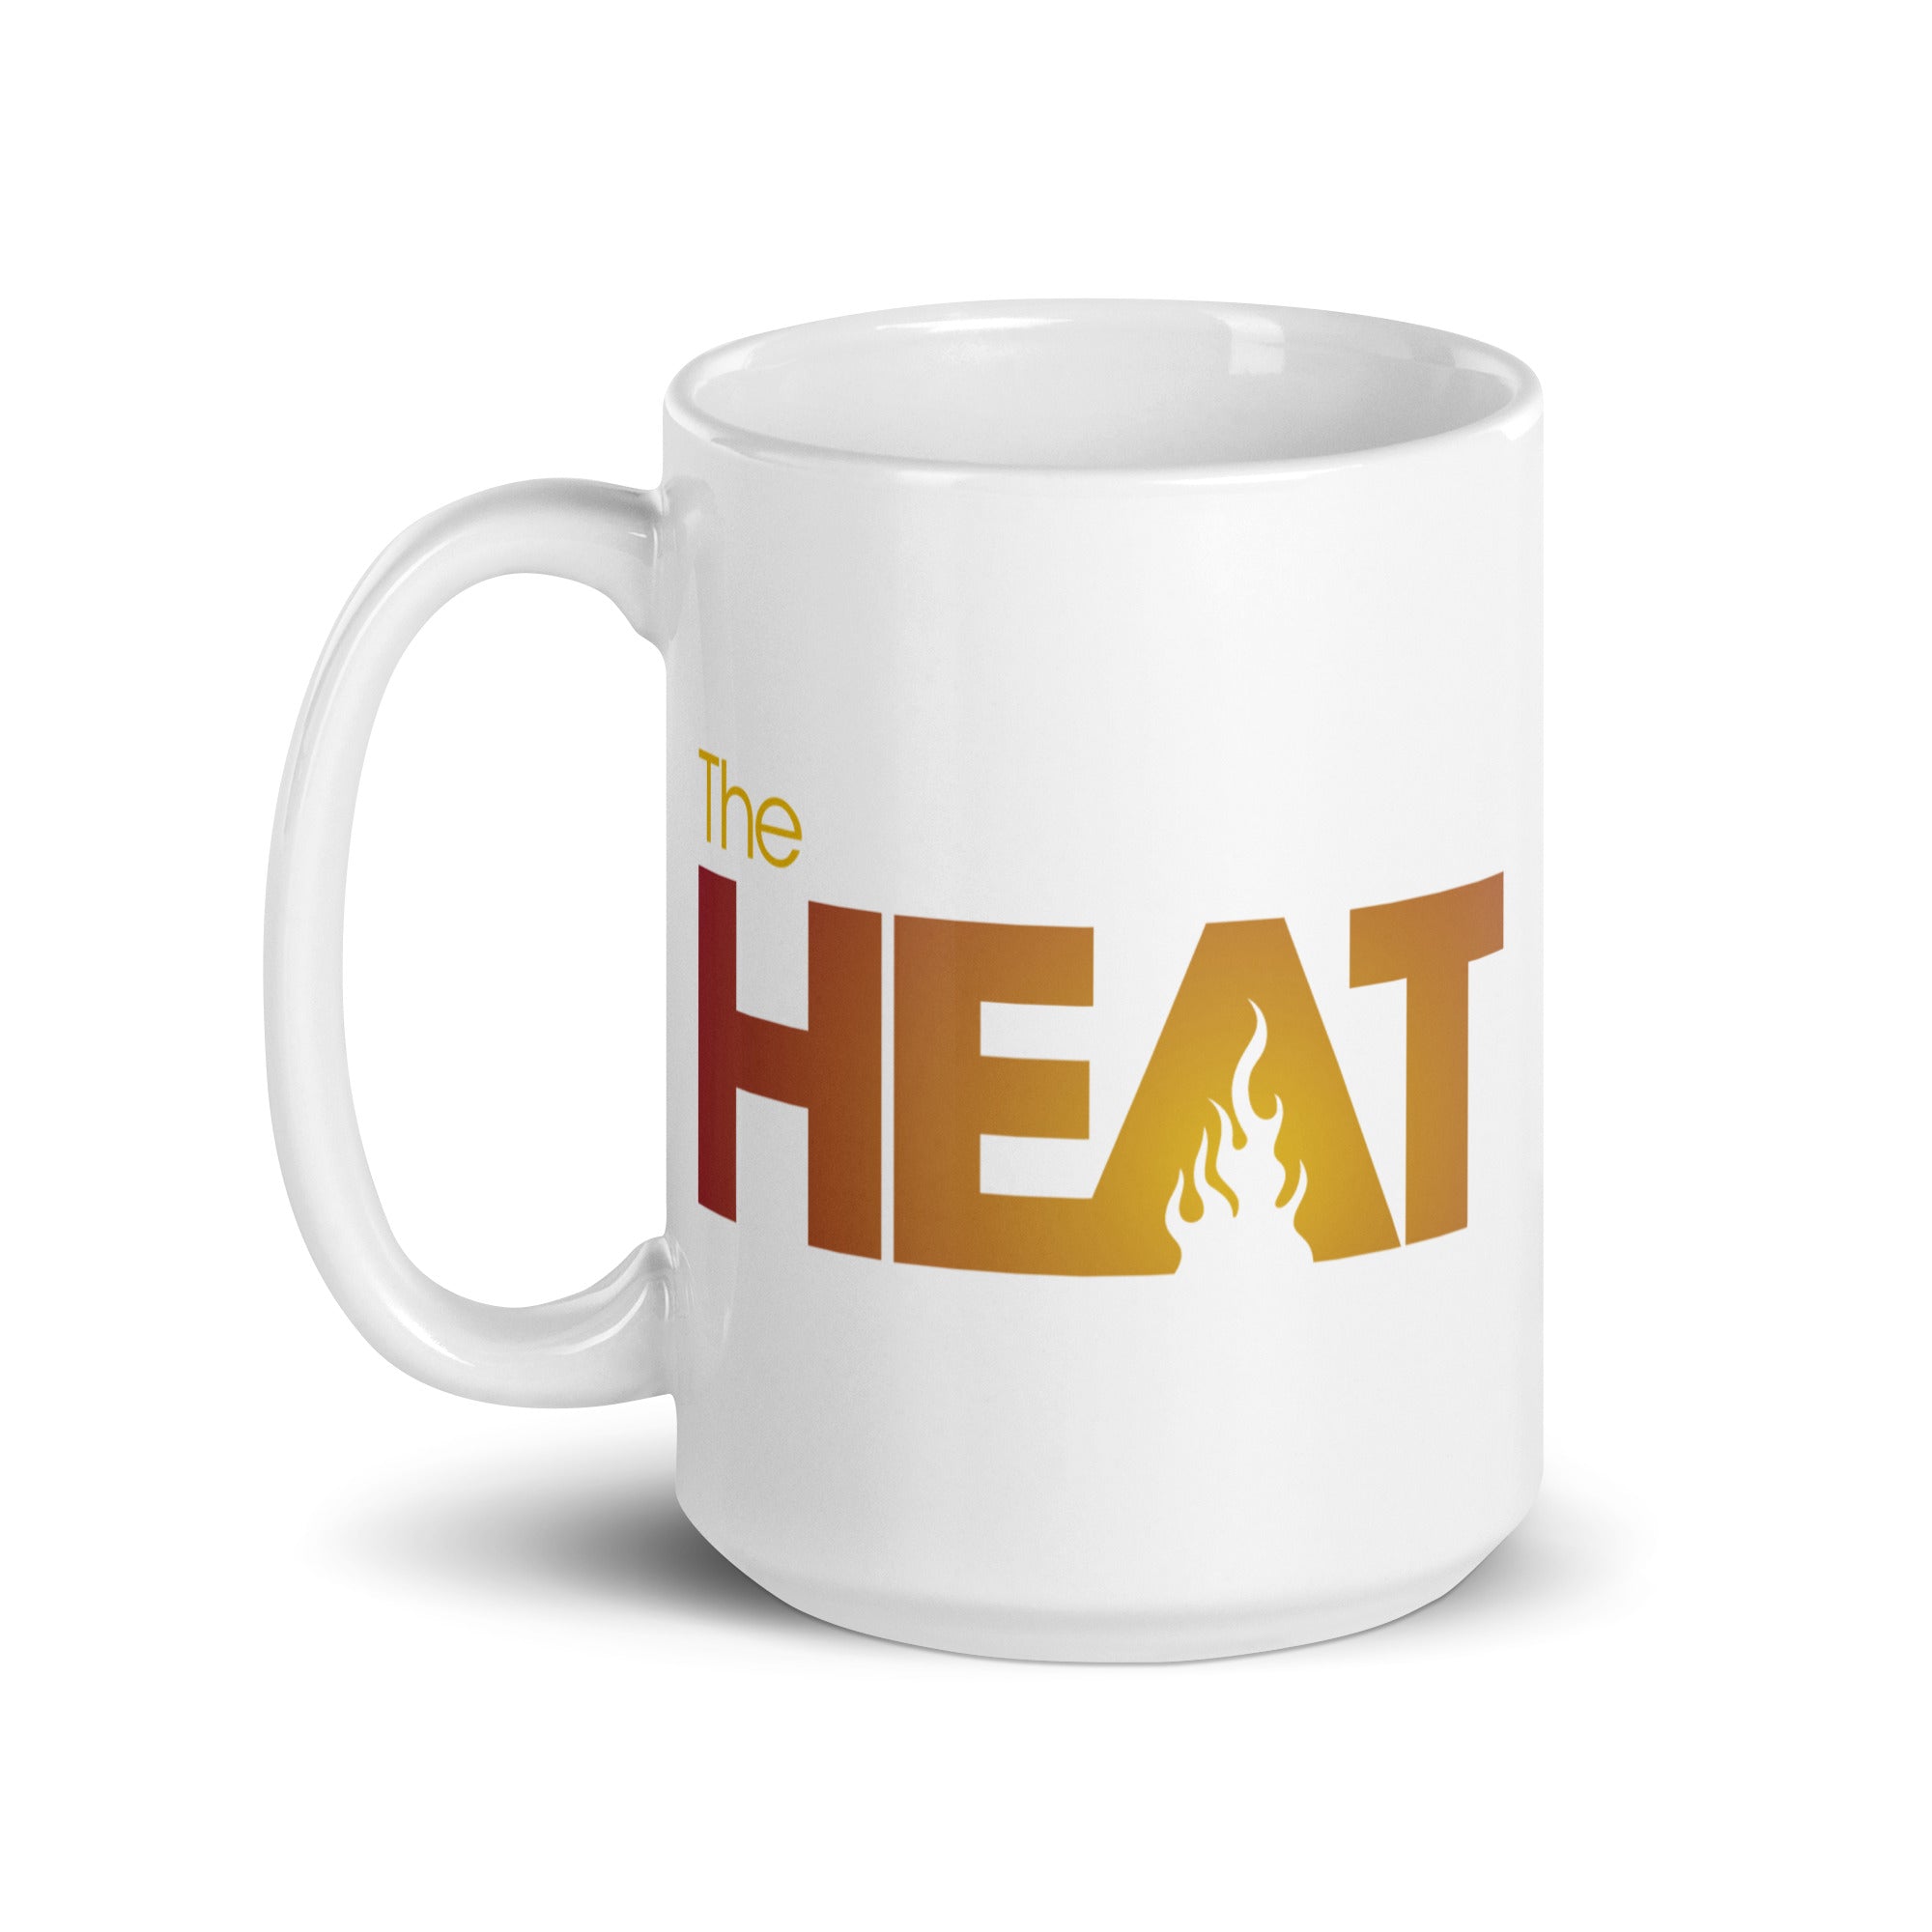 The Heat: Mug